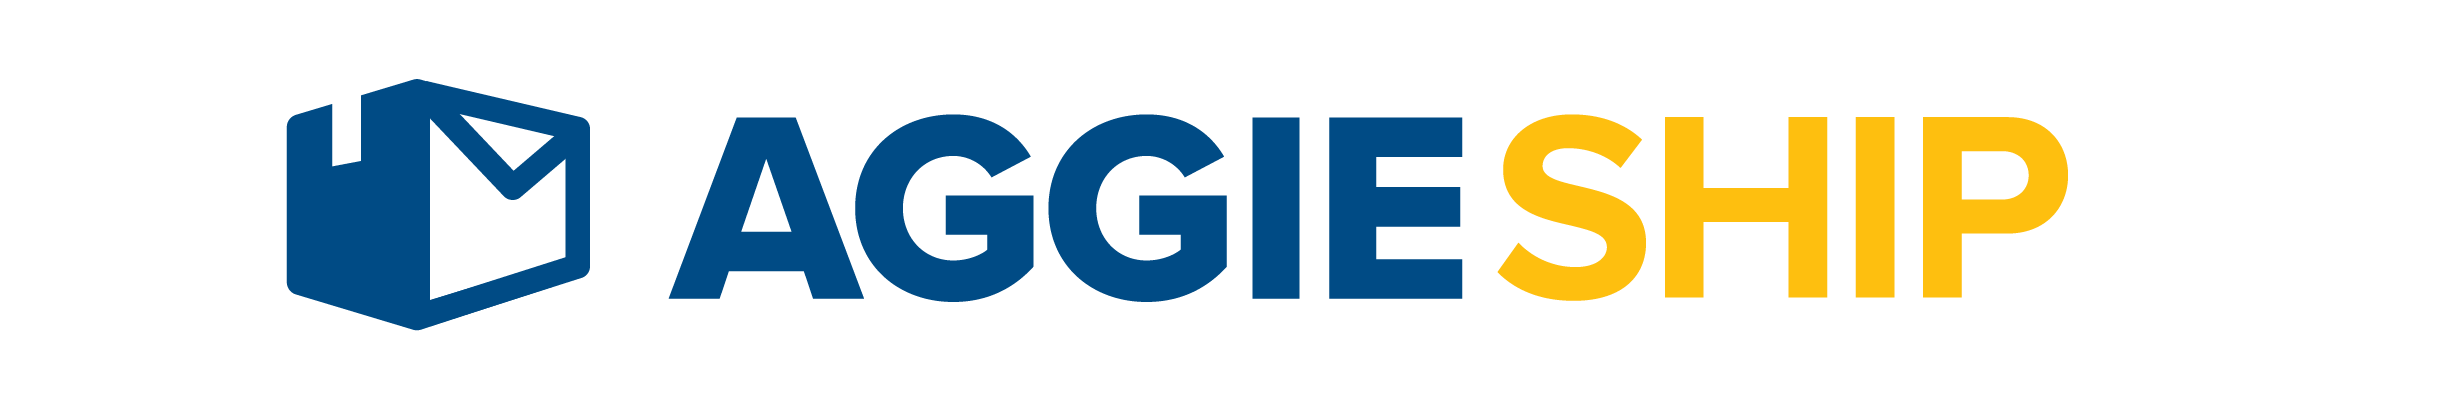 aggie ship logo